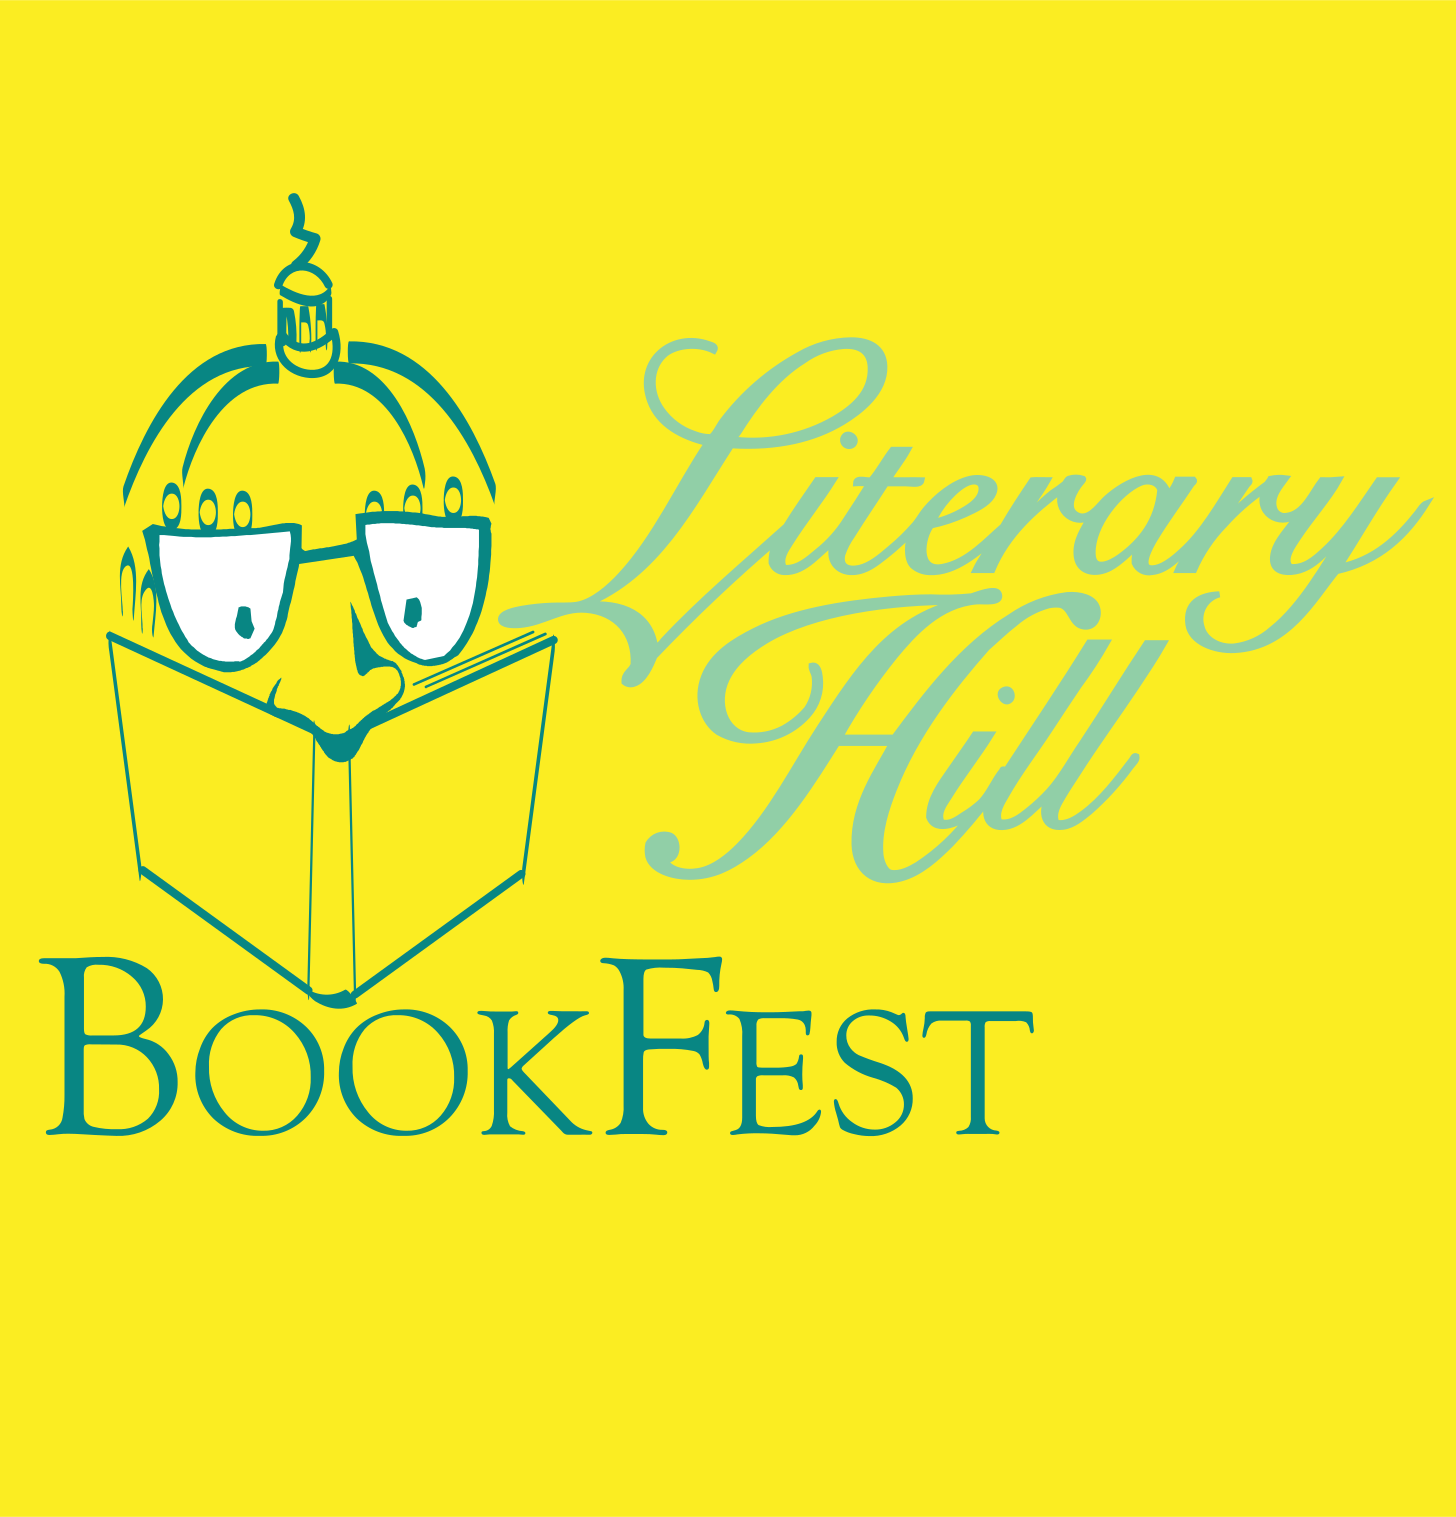 literary hill bookfest logo